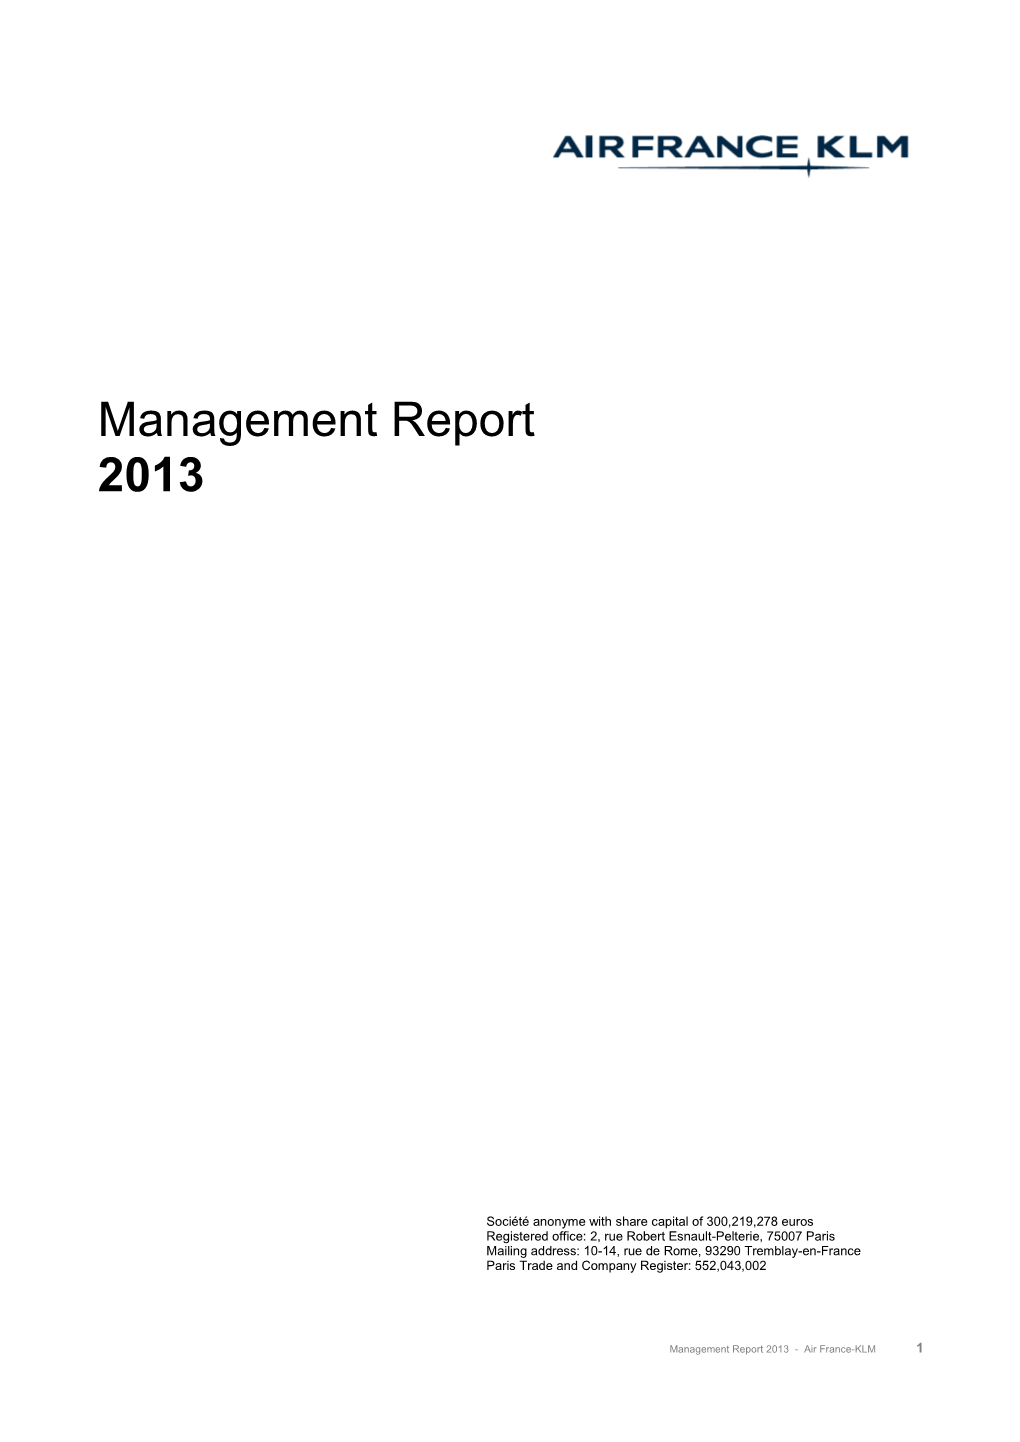 Management Report 2013 - Air France-KLM 1